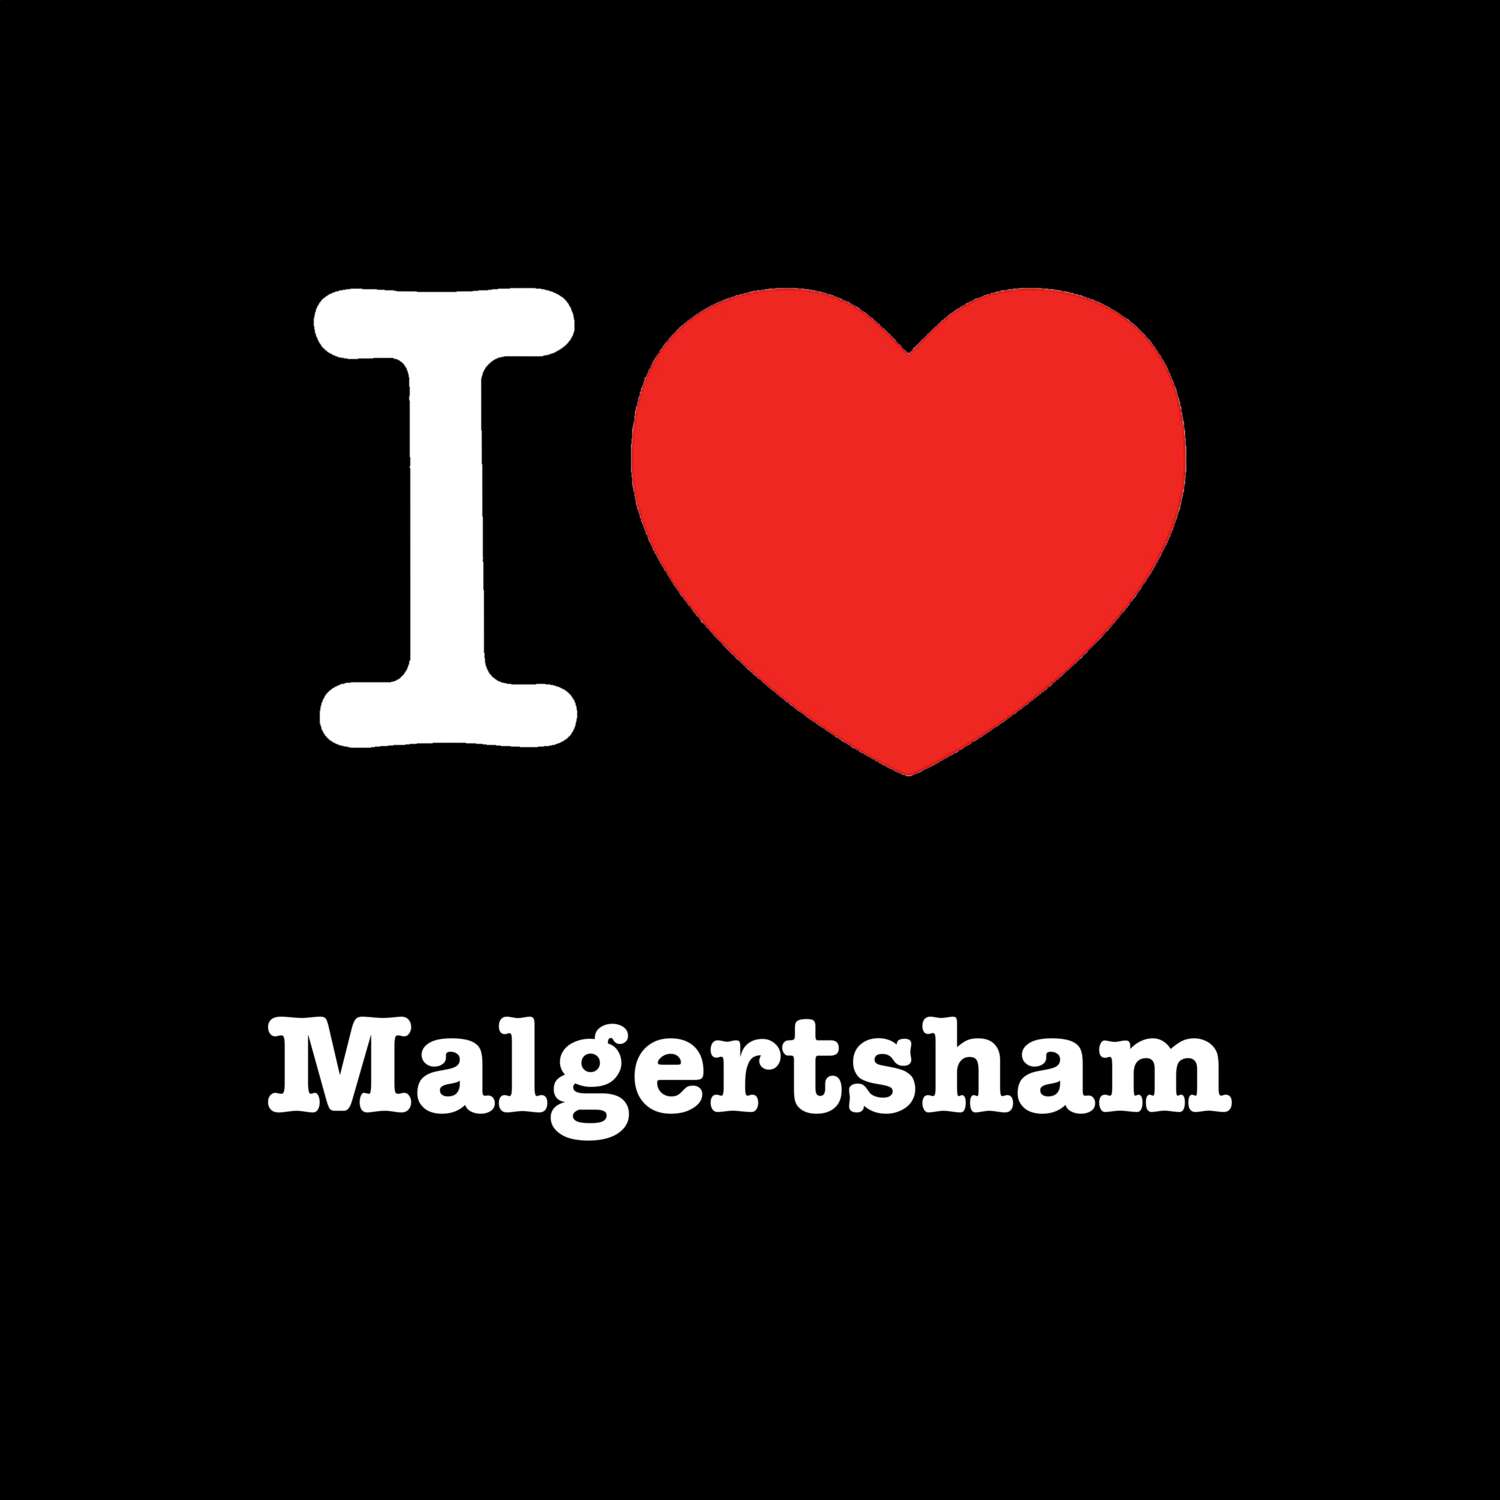 Malgertsham T-Shirt »I love«